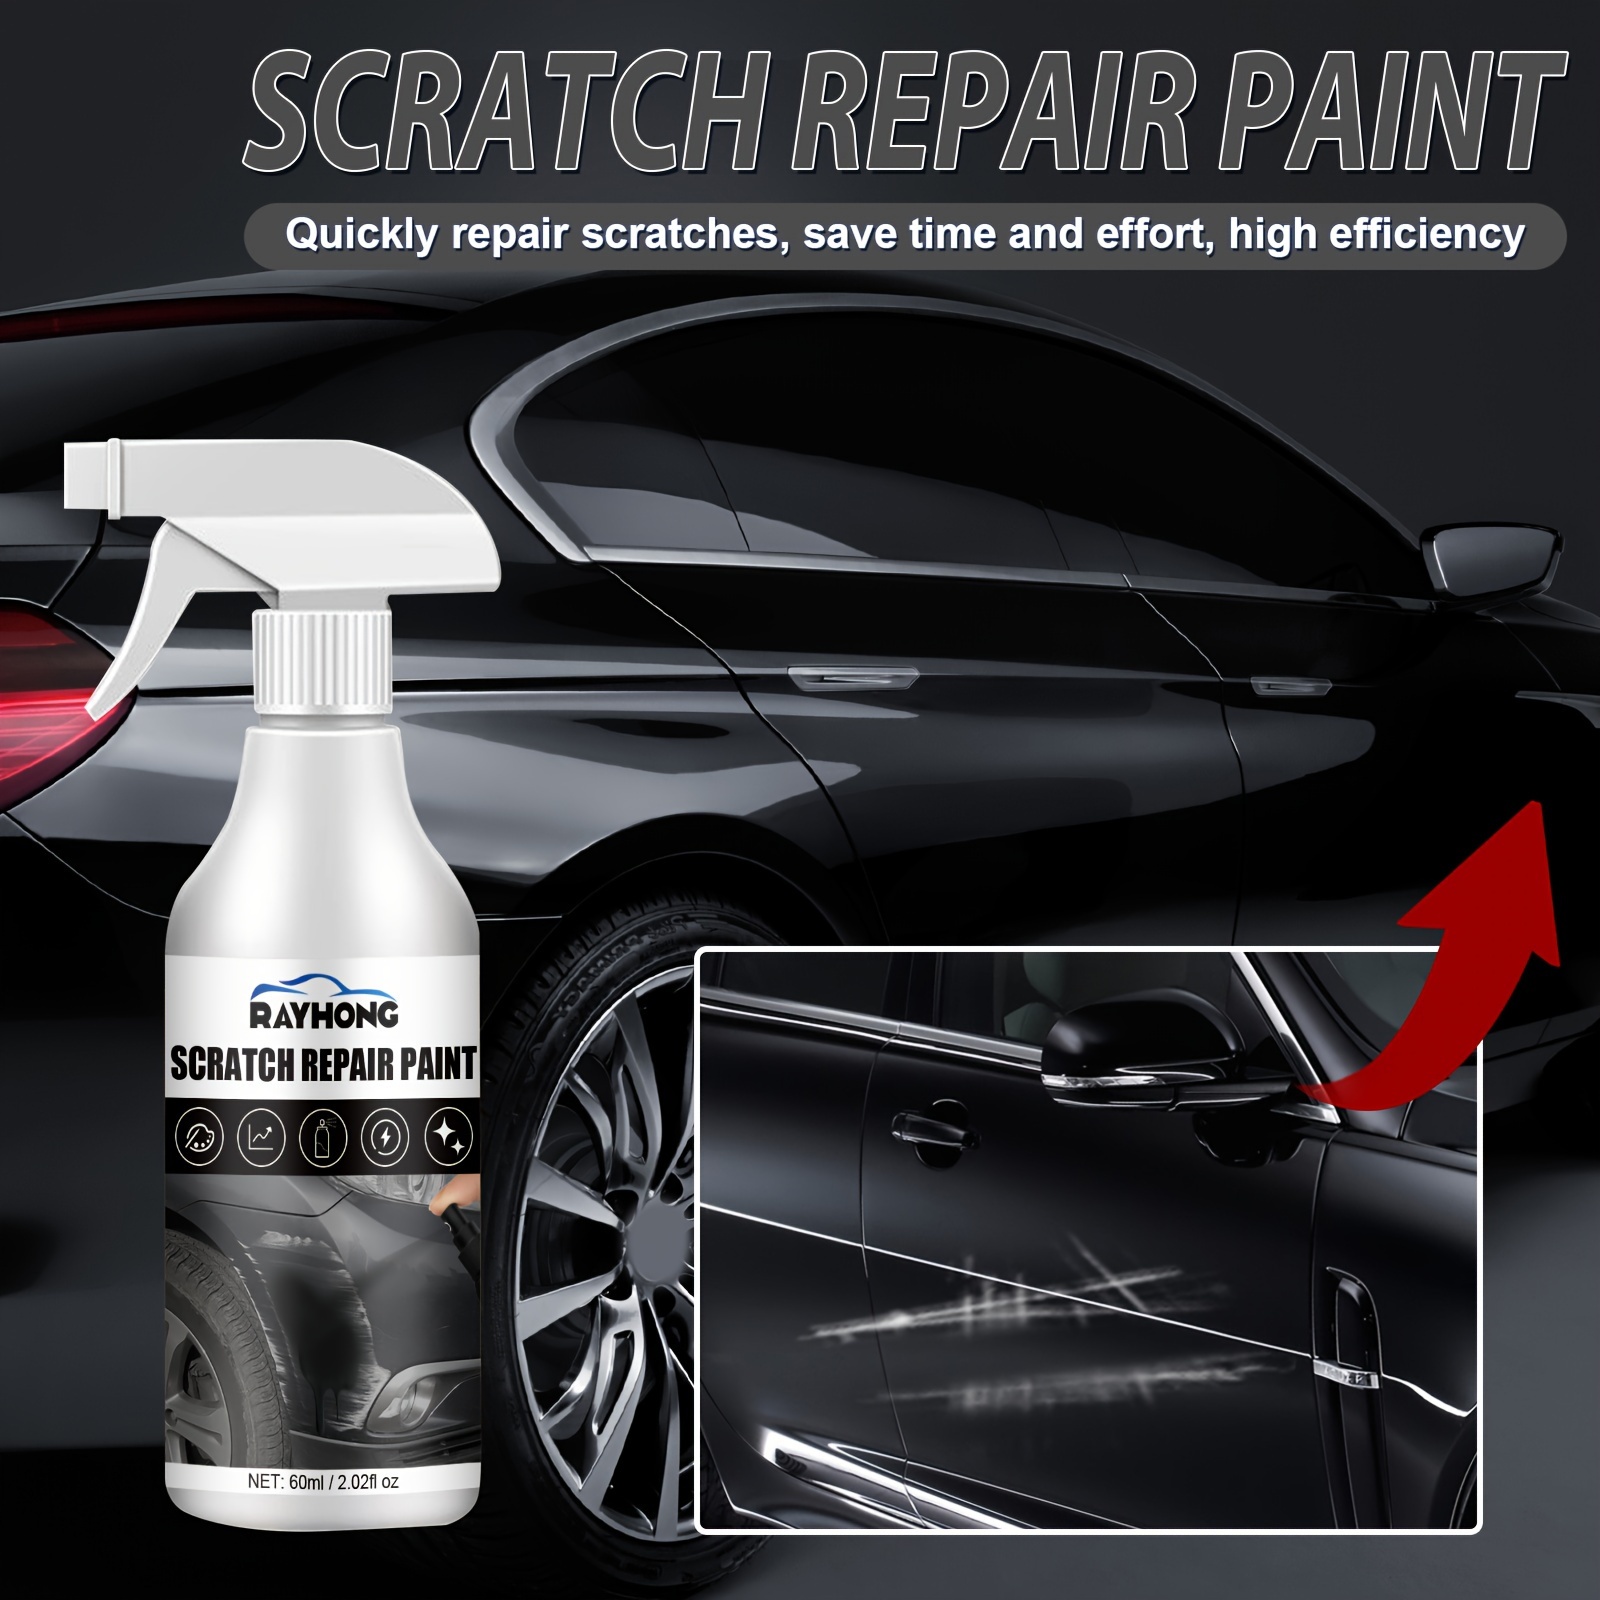 Eelhoe Car Scratch Remover Nano Spray Anti-scratch Spray Crystal Ceramic  Care Glass Hydrophobic Glass Coating Coating Super @ Best Price Online